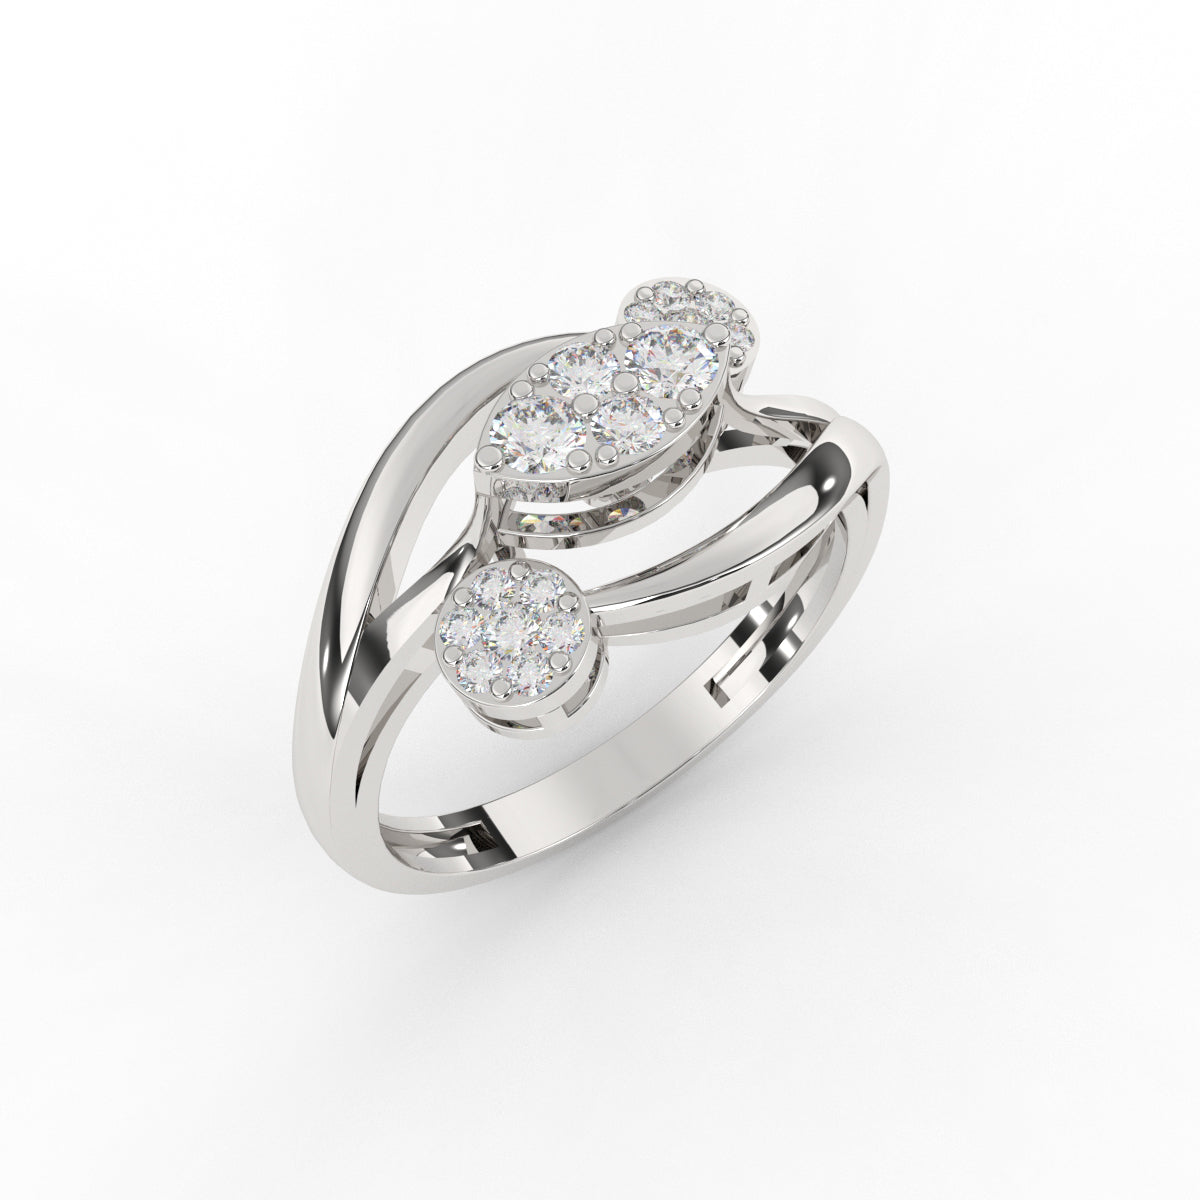 Charming Pave Diamond Ring